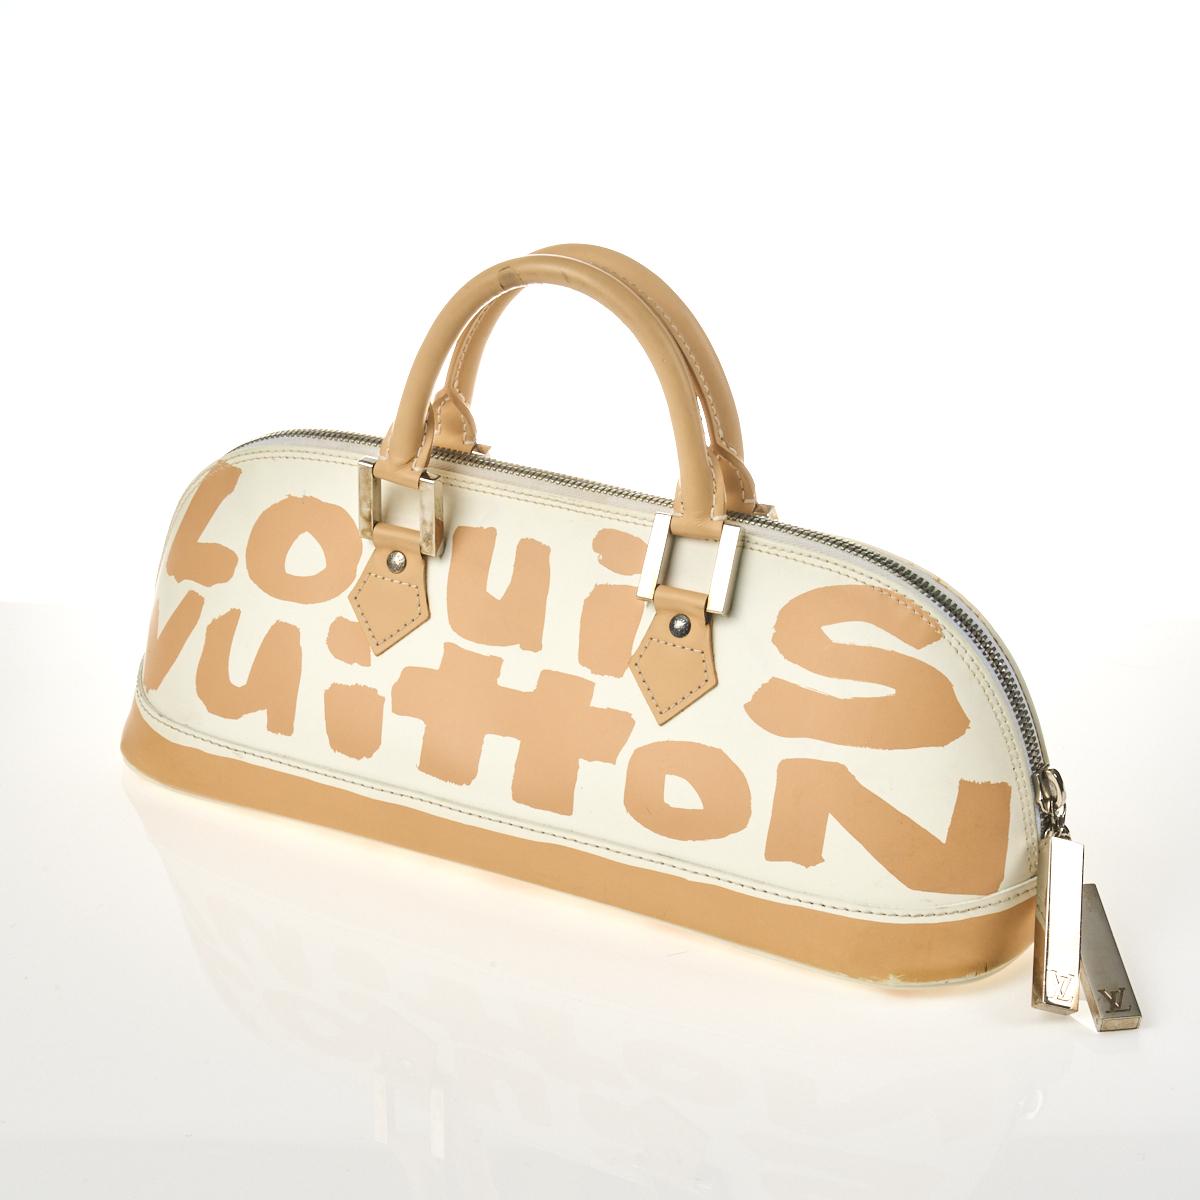 Louis Vuitton Alma Handbag Limited Edition Graffiti Leather PM at